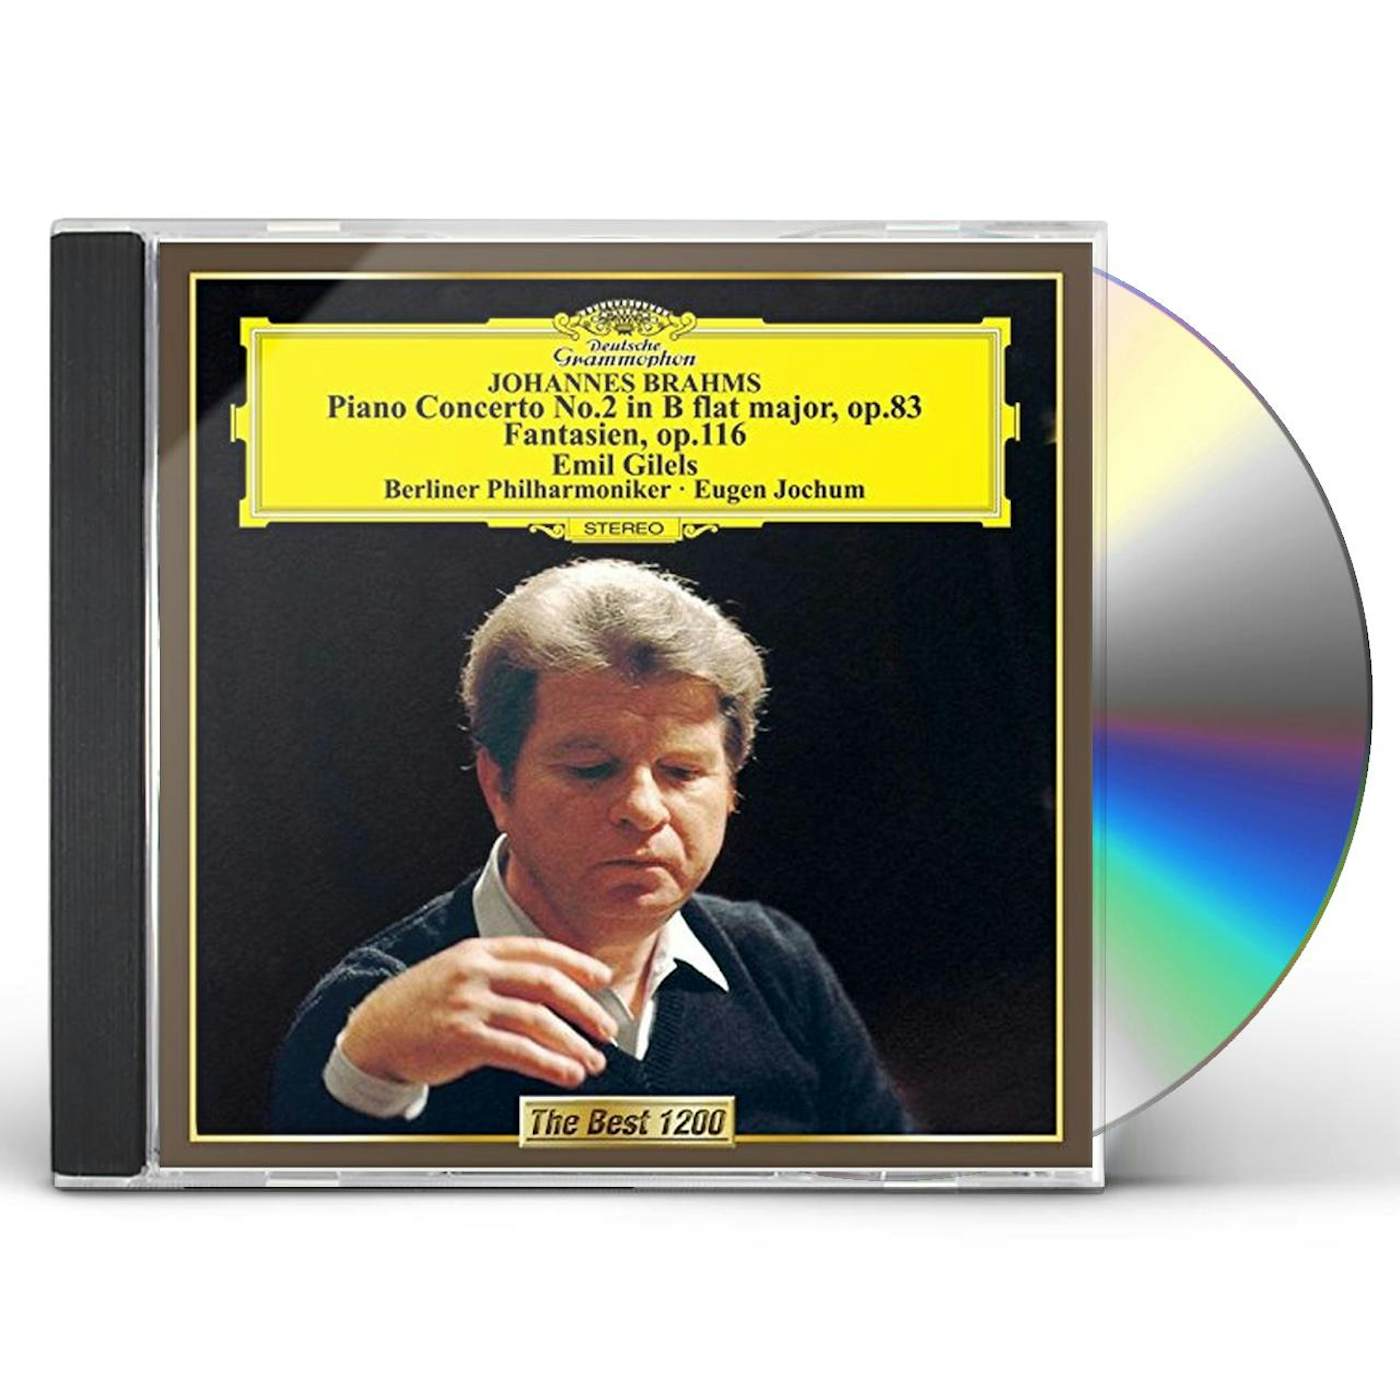 Emil Gilels BRAHMS: PIANO CONCERTO NO. 2. FANTASY CD